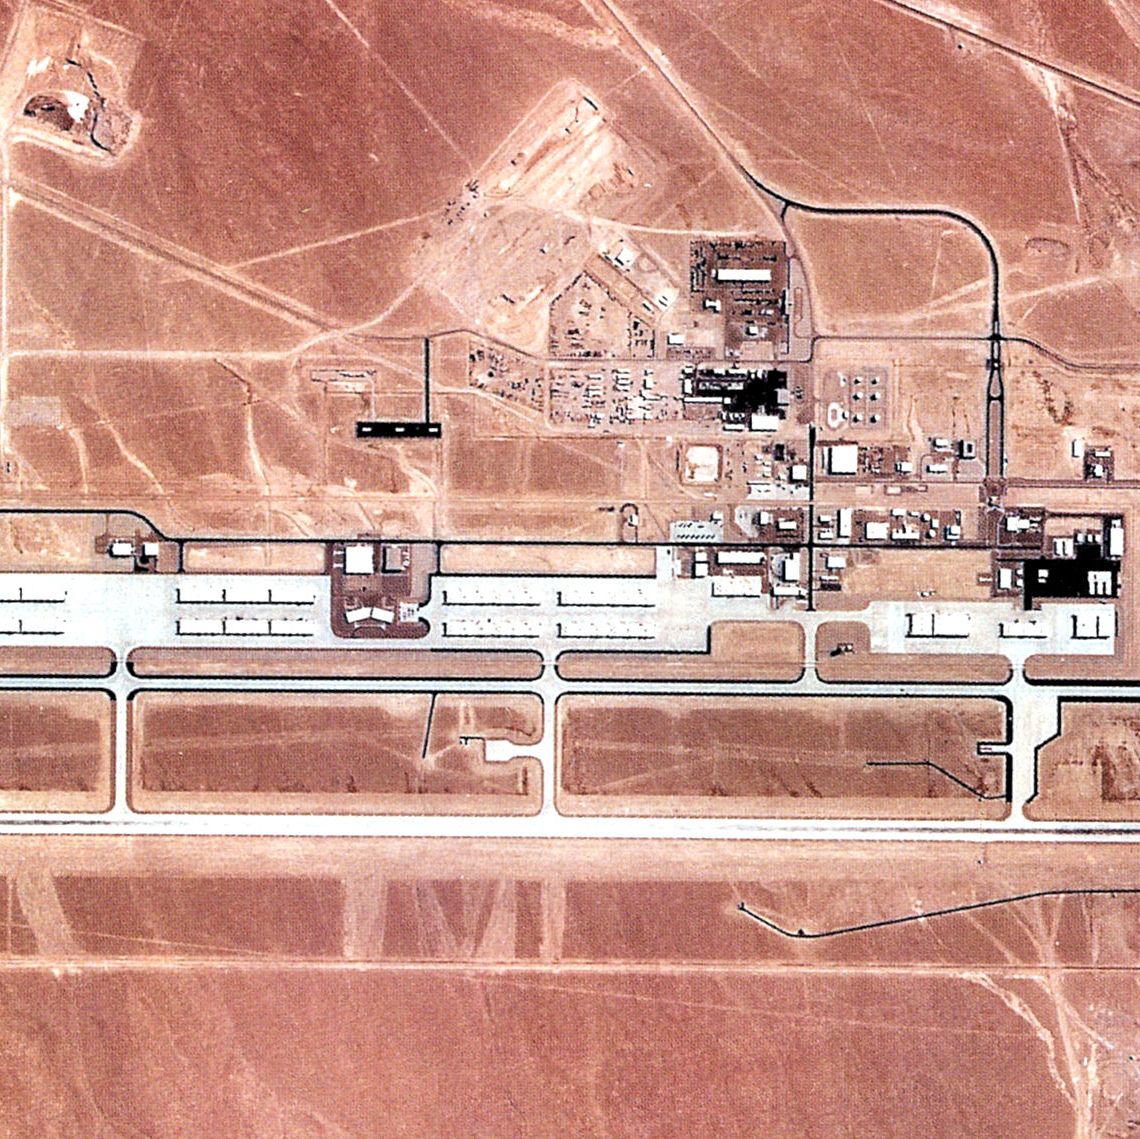 Hmm, the Secretary of Defense Just Visited America's Secret 'Area 52'